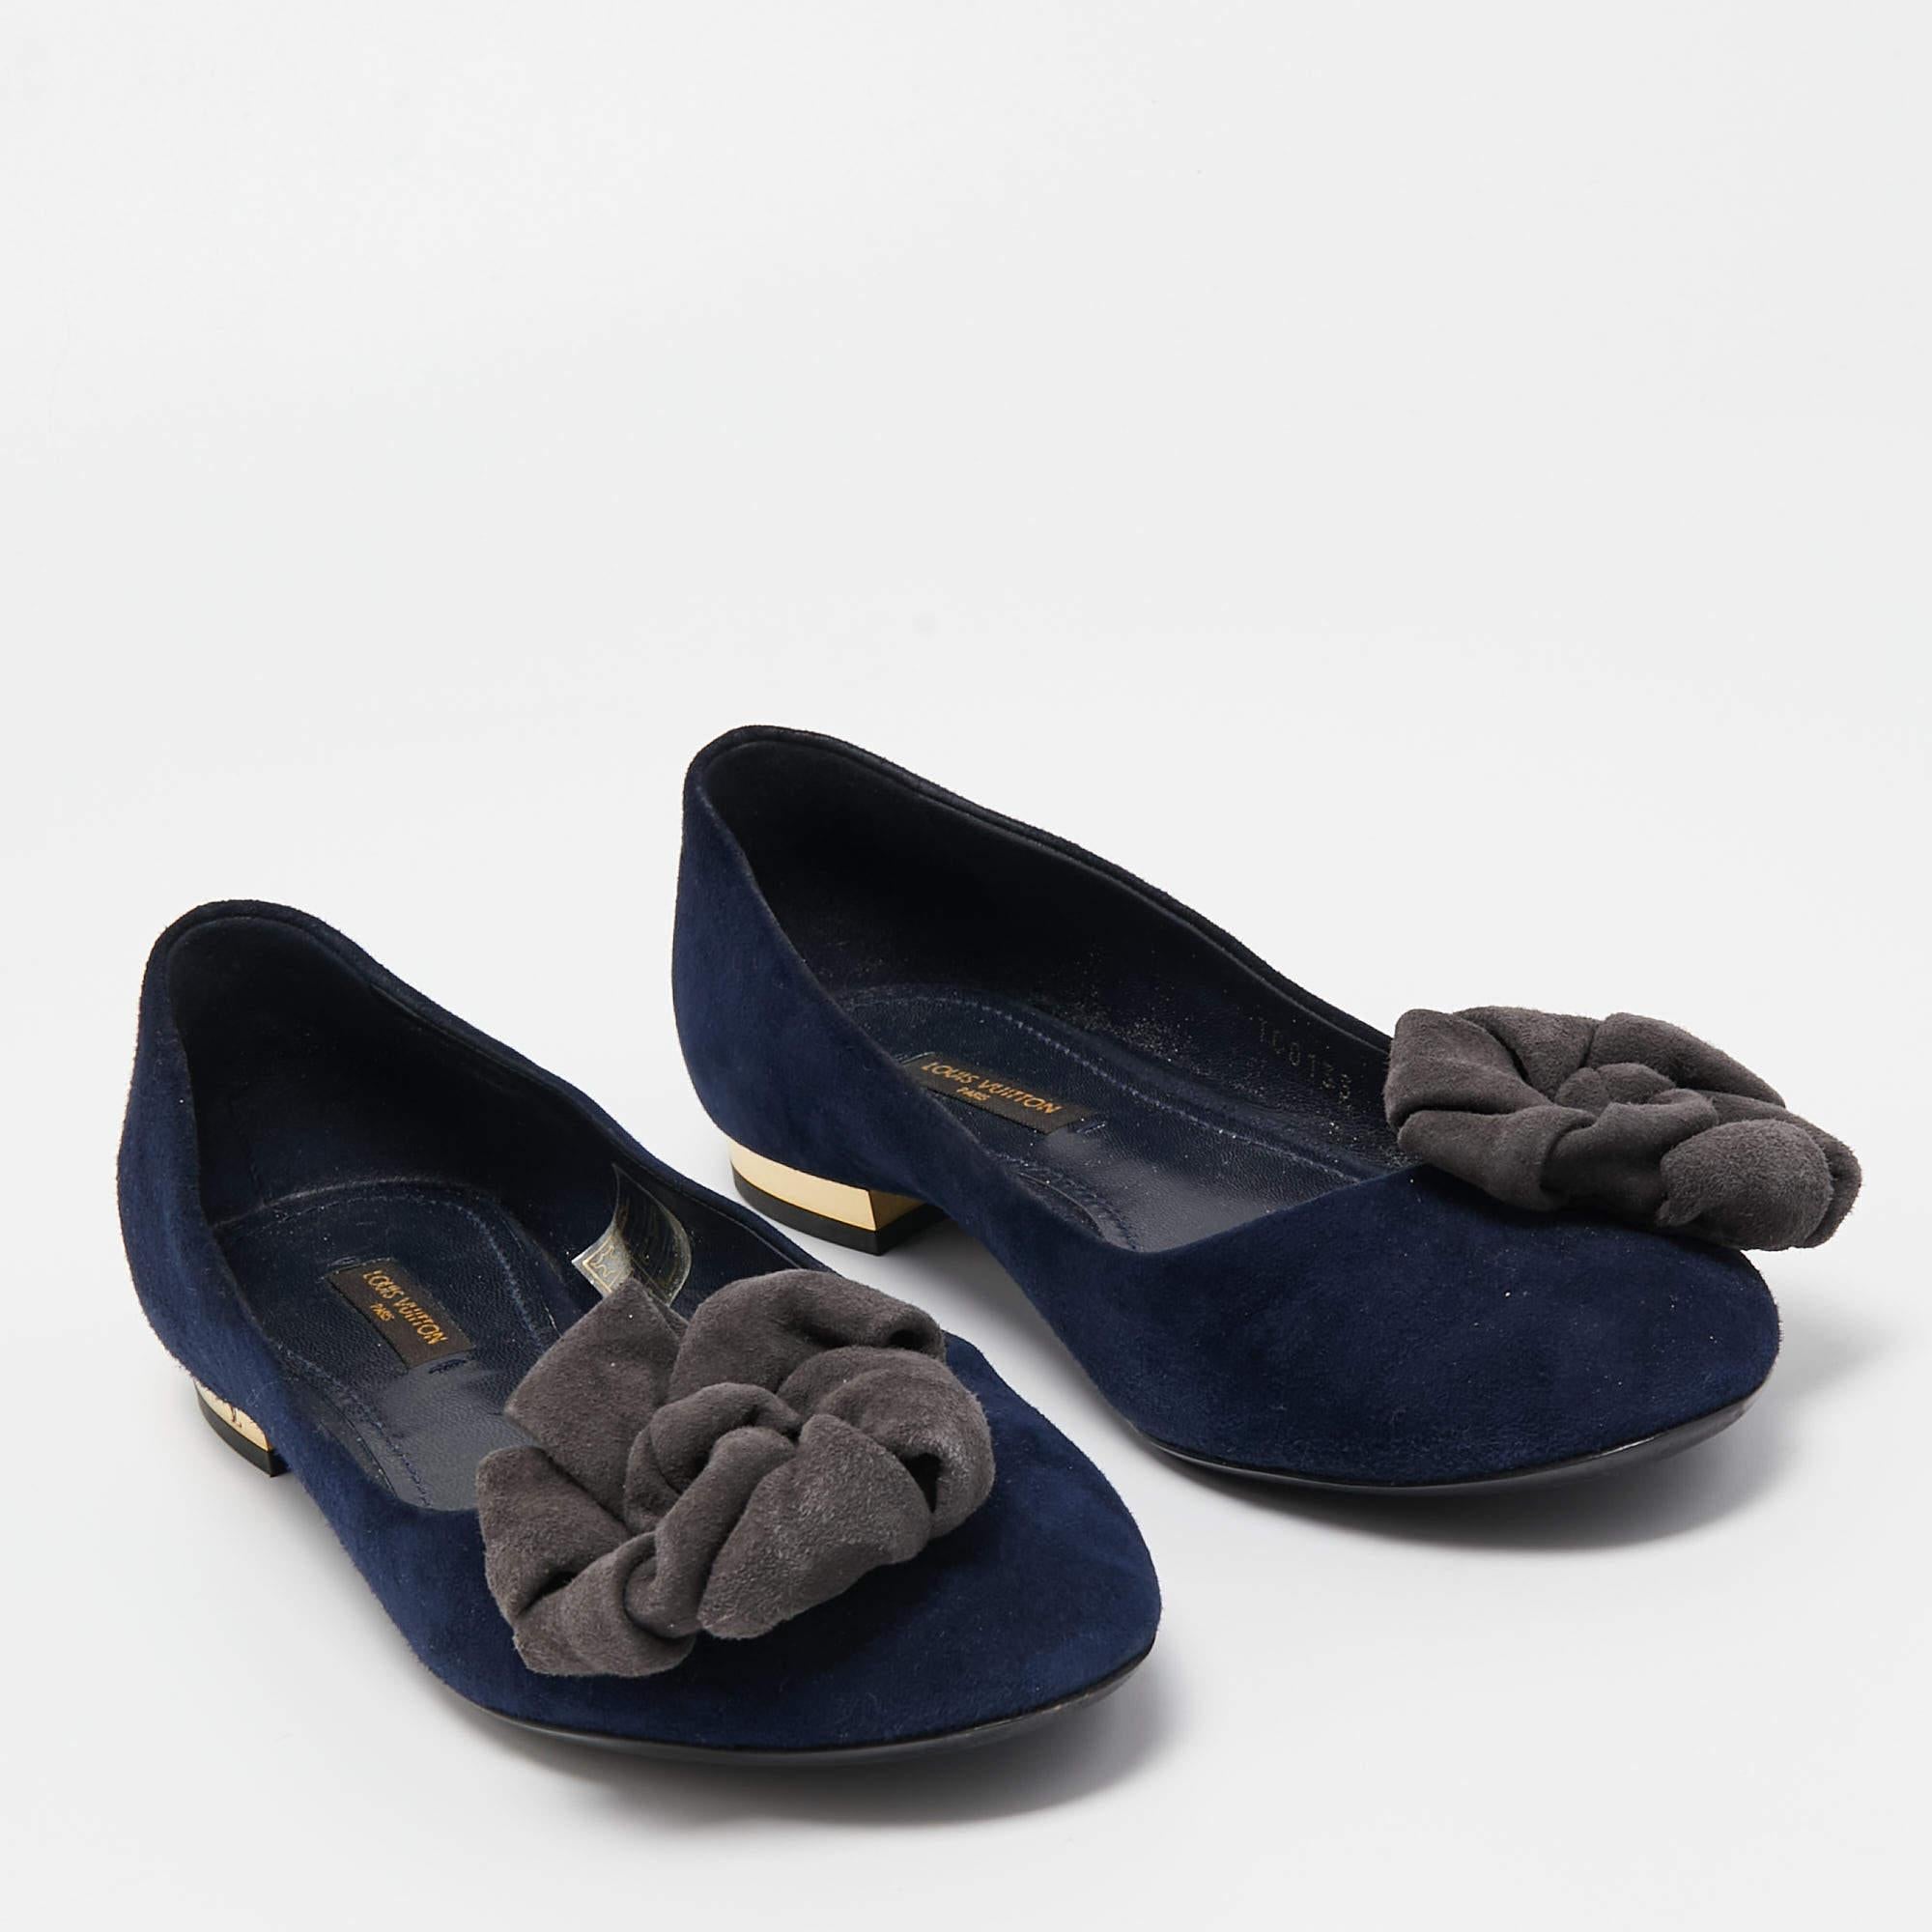 Louis Vuitton Navy Blue Suede Flower Embellished Ballet Flats Size 36.5 In Good Condition For Sale In Dubai, Al Qouz 2